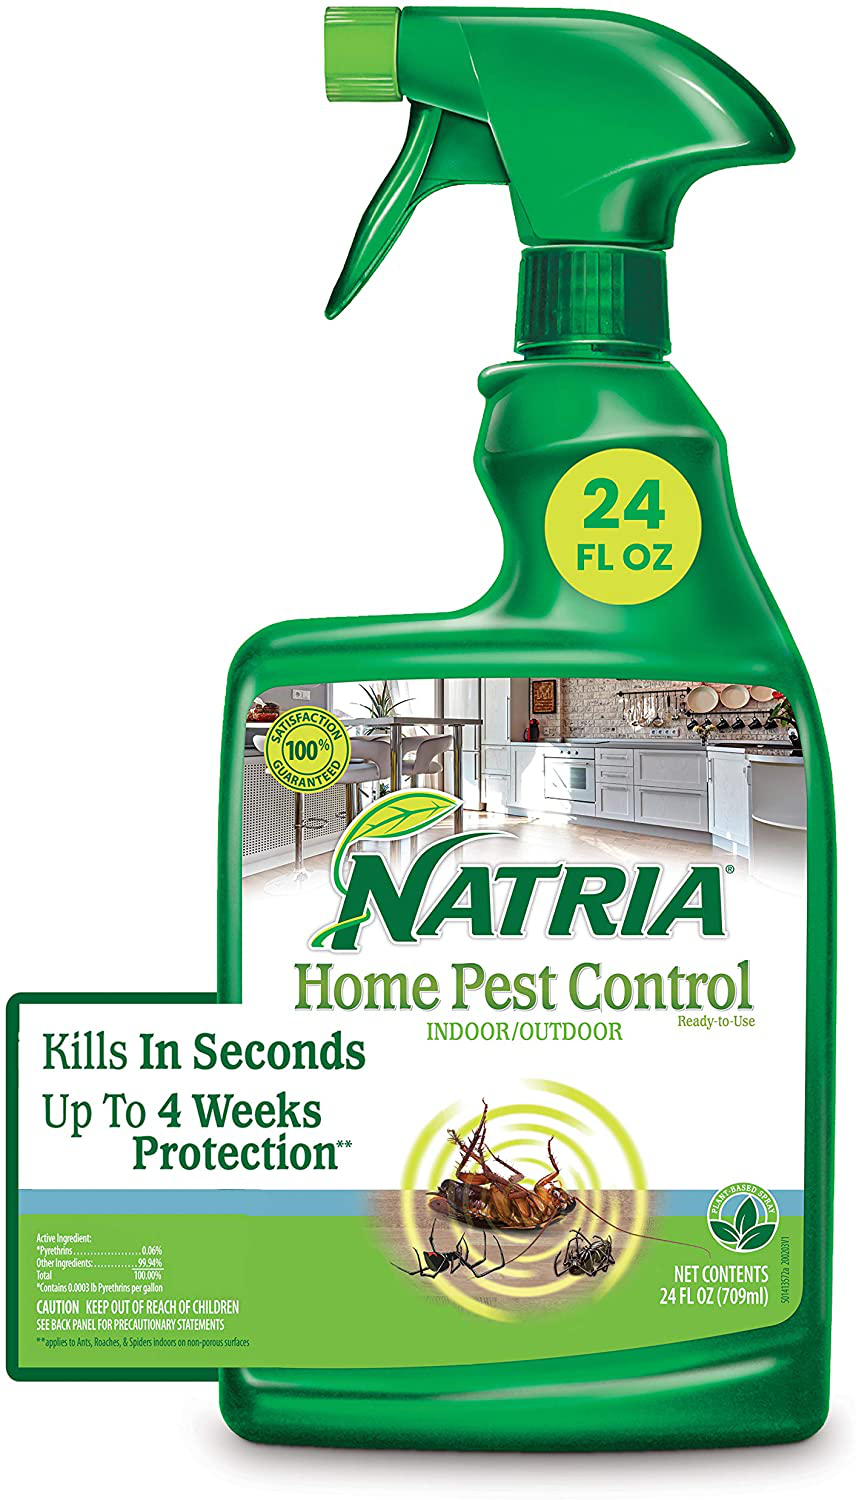 Natria 706261A Home Pest Control, 1-Gallon, Ready-to-Use Bug Killer for Indoor and Outdoor, 1 Gallon